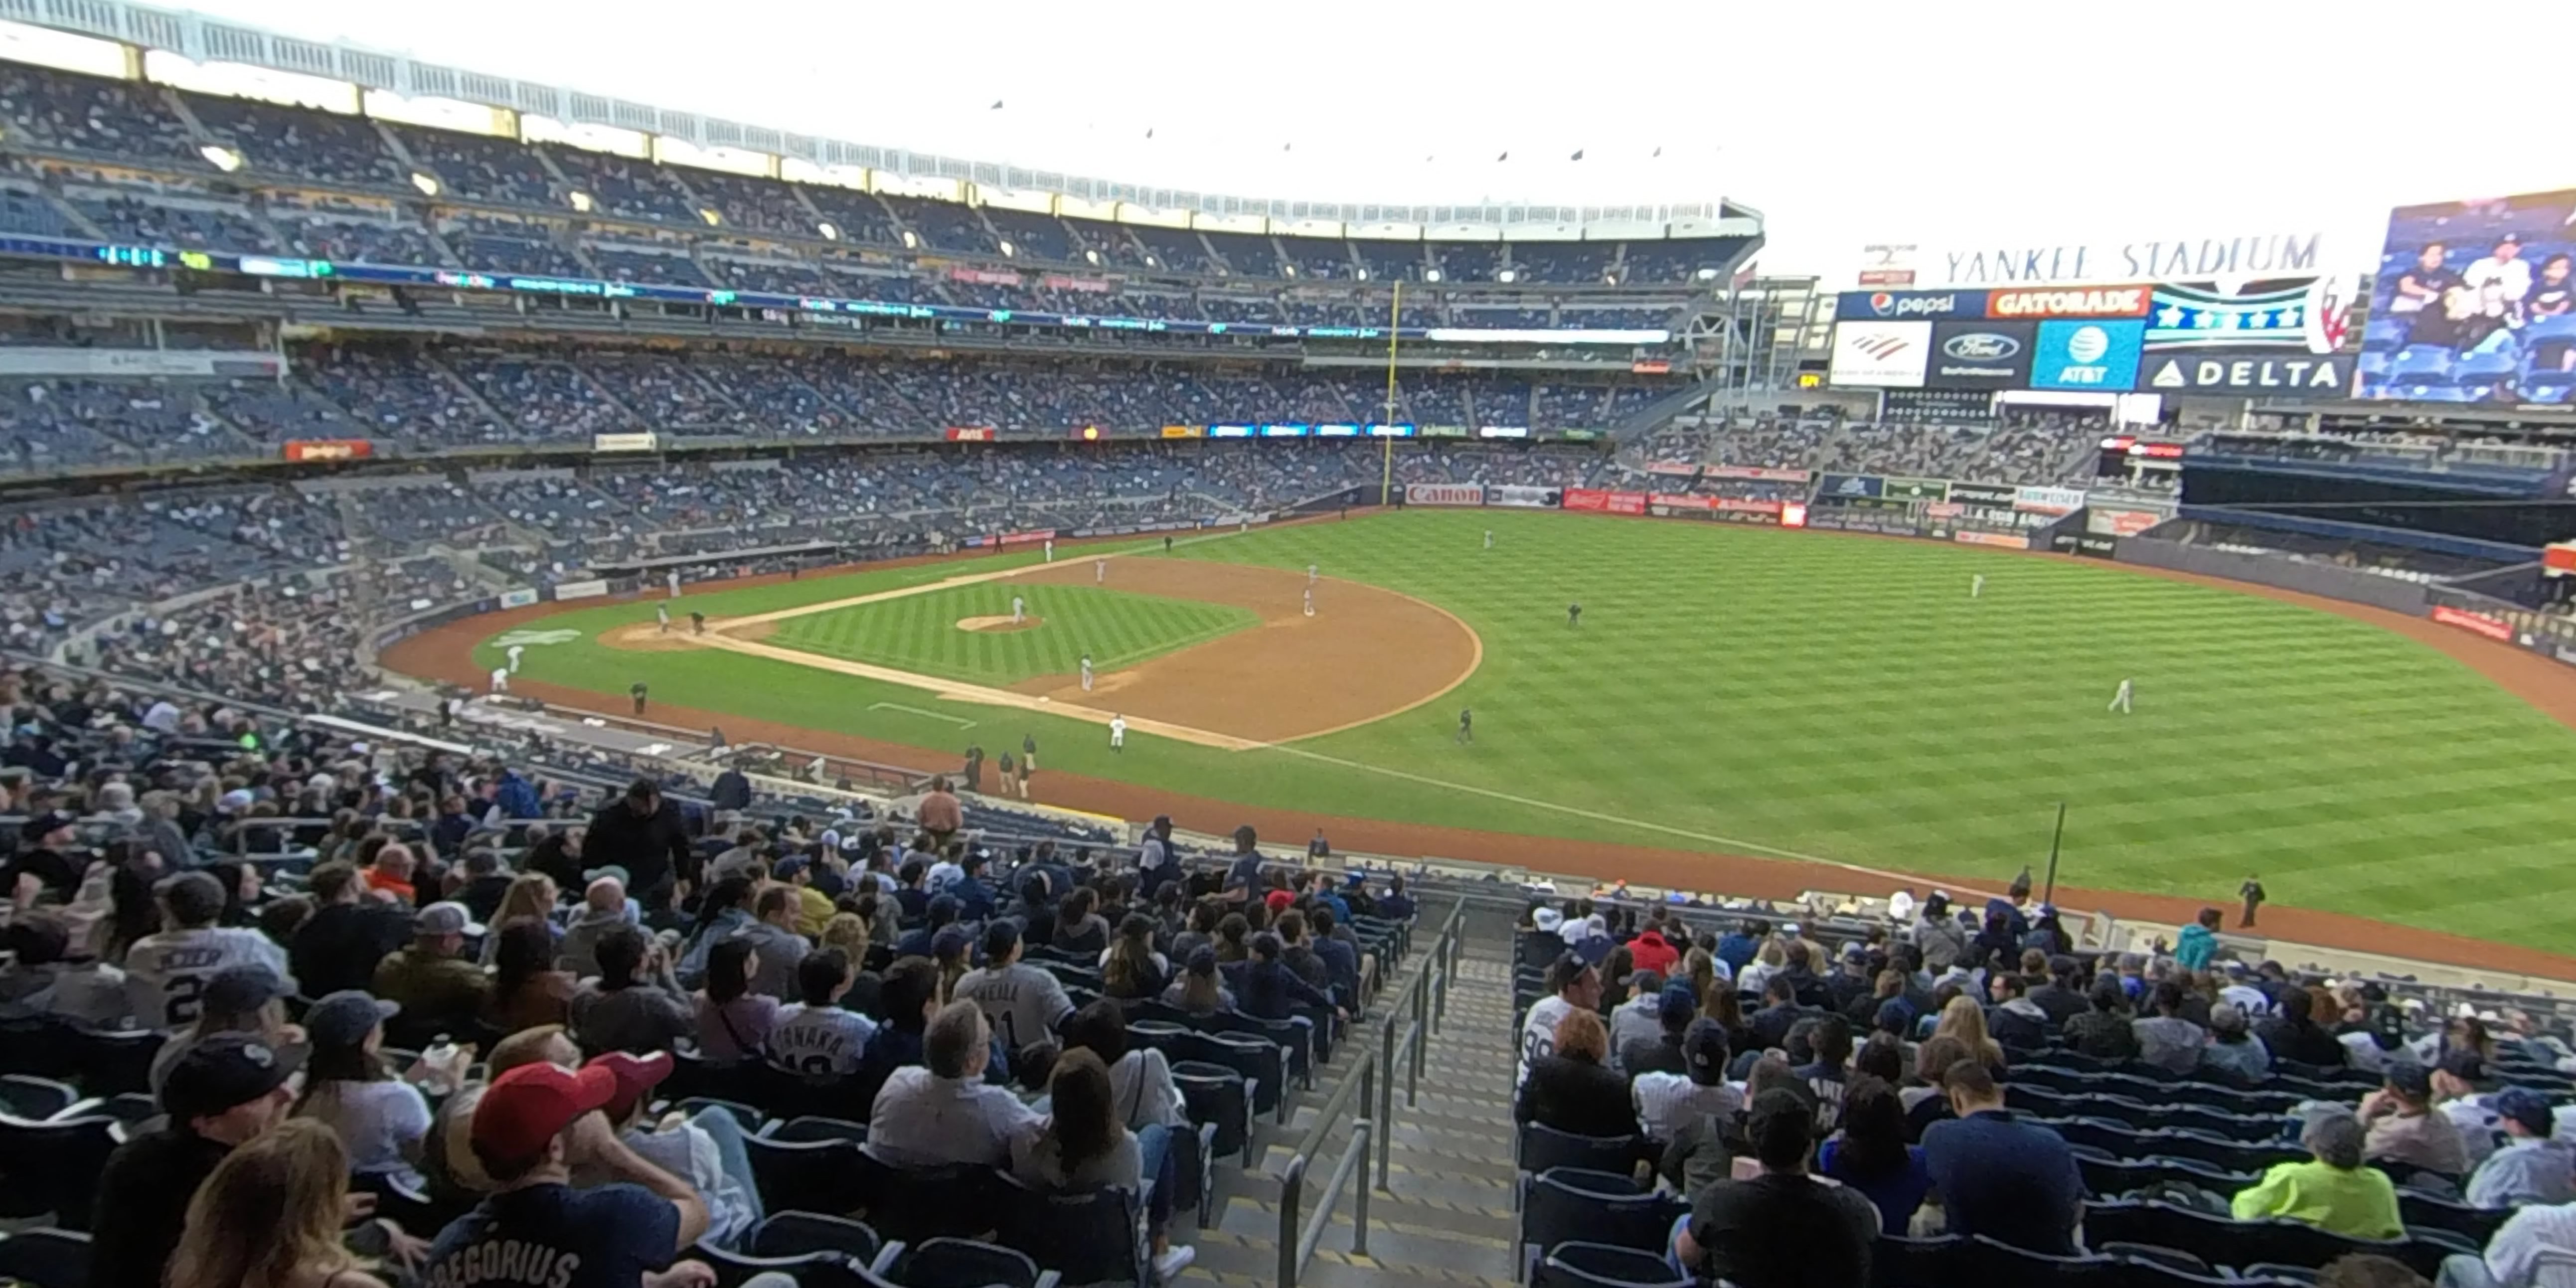 Section 213 At Yankee Stadium Rateyourseats Com